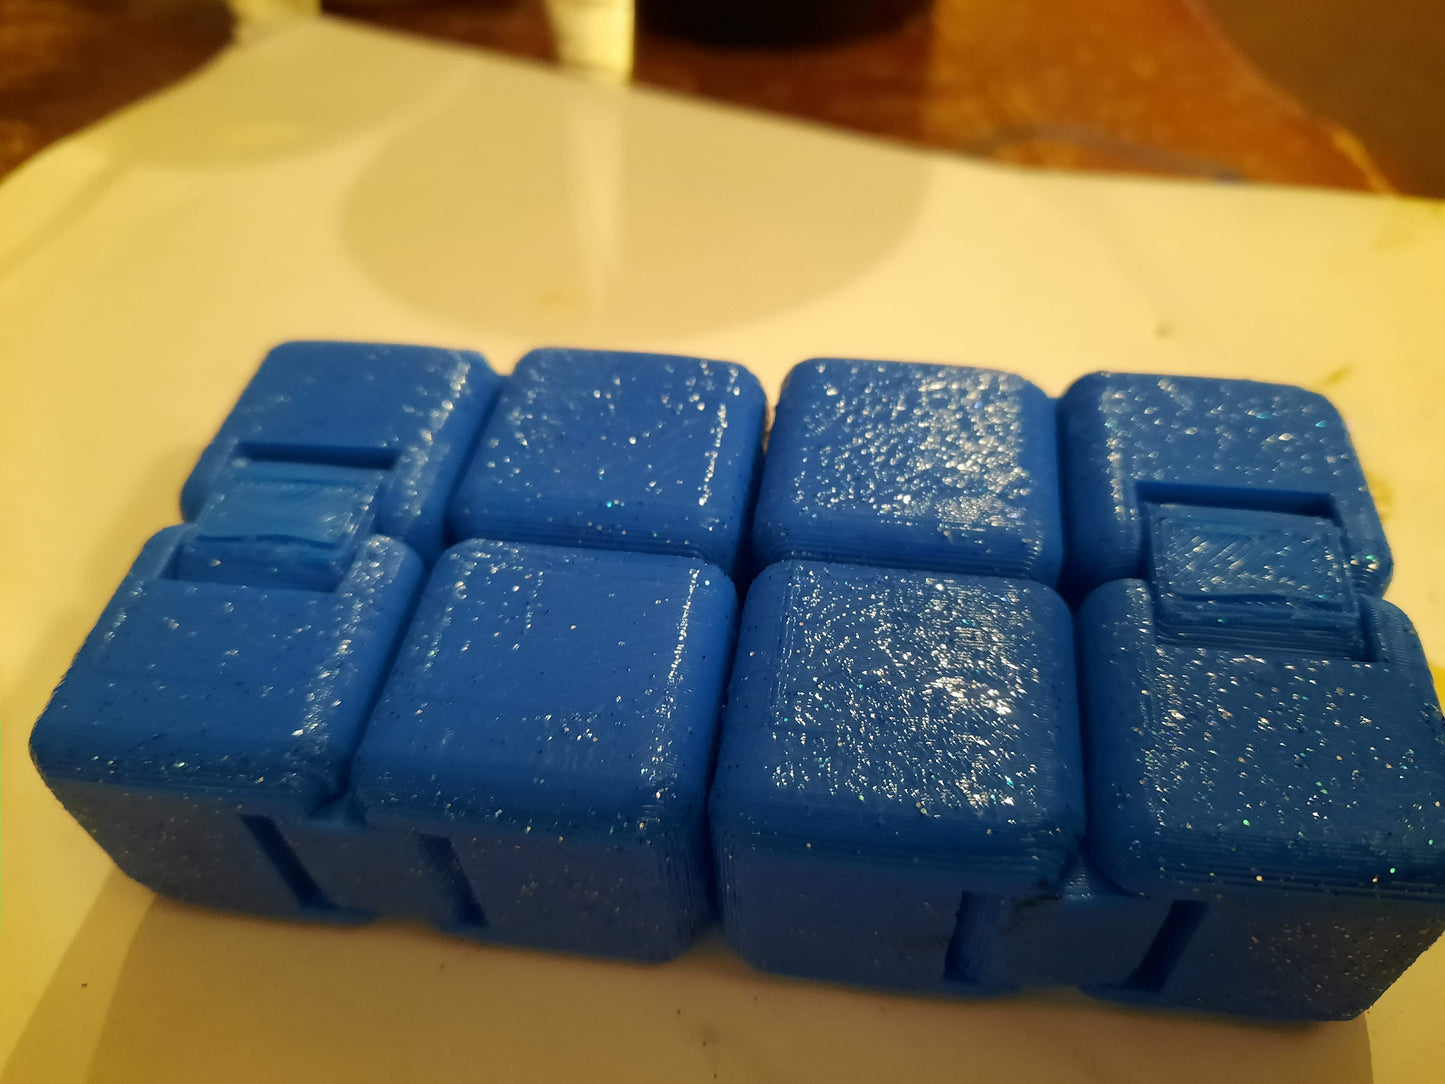 Infinity Cube Fidget toy